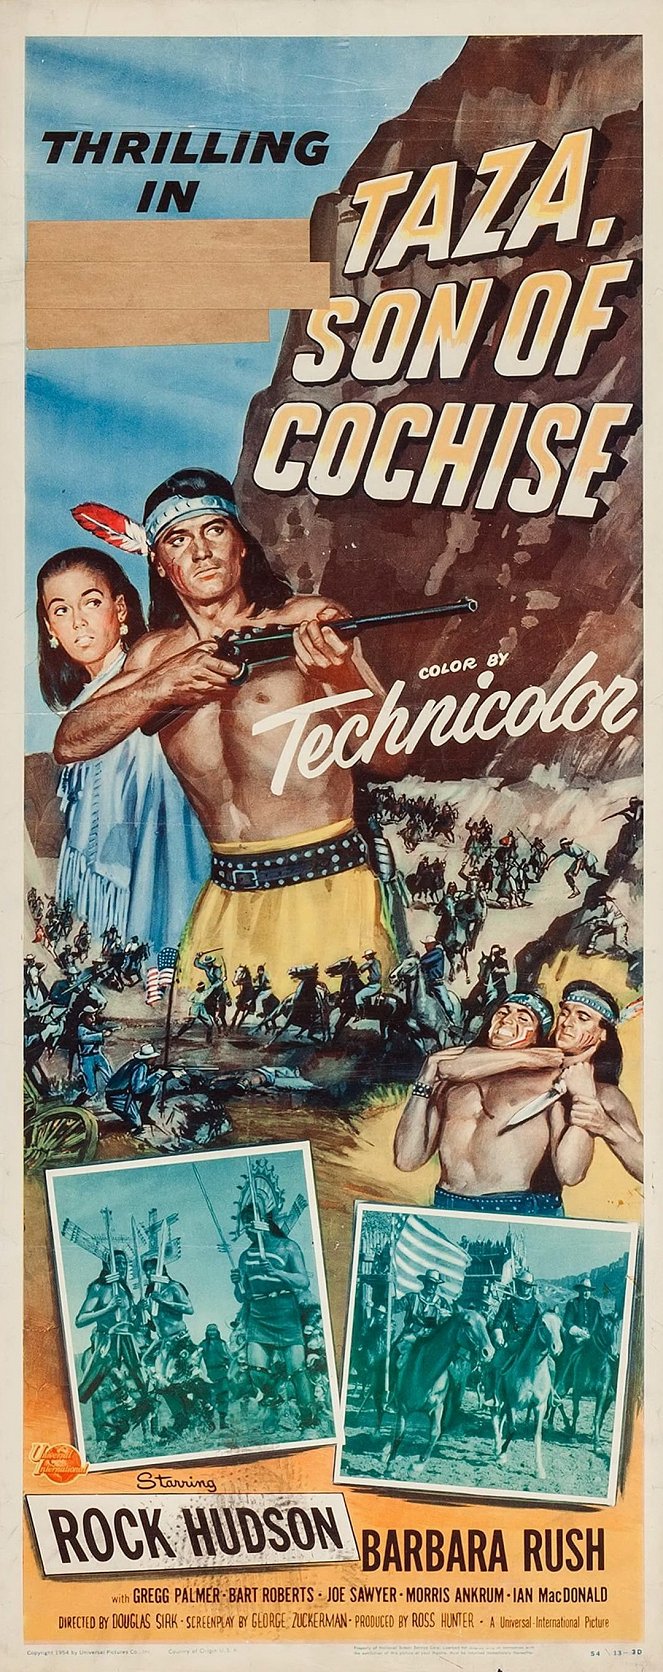 Taza, Son of Cochise - Plakátok